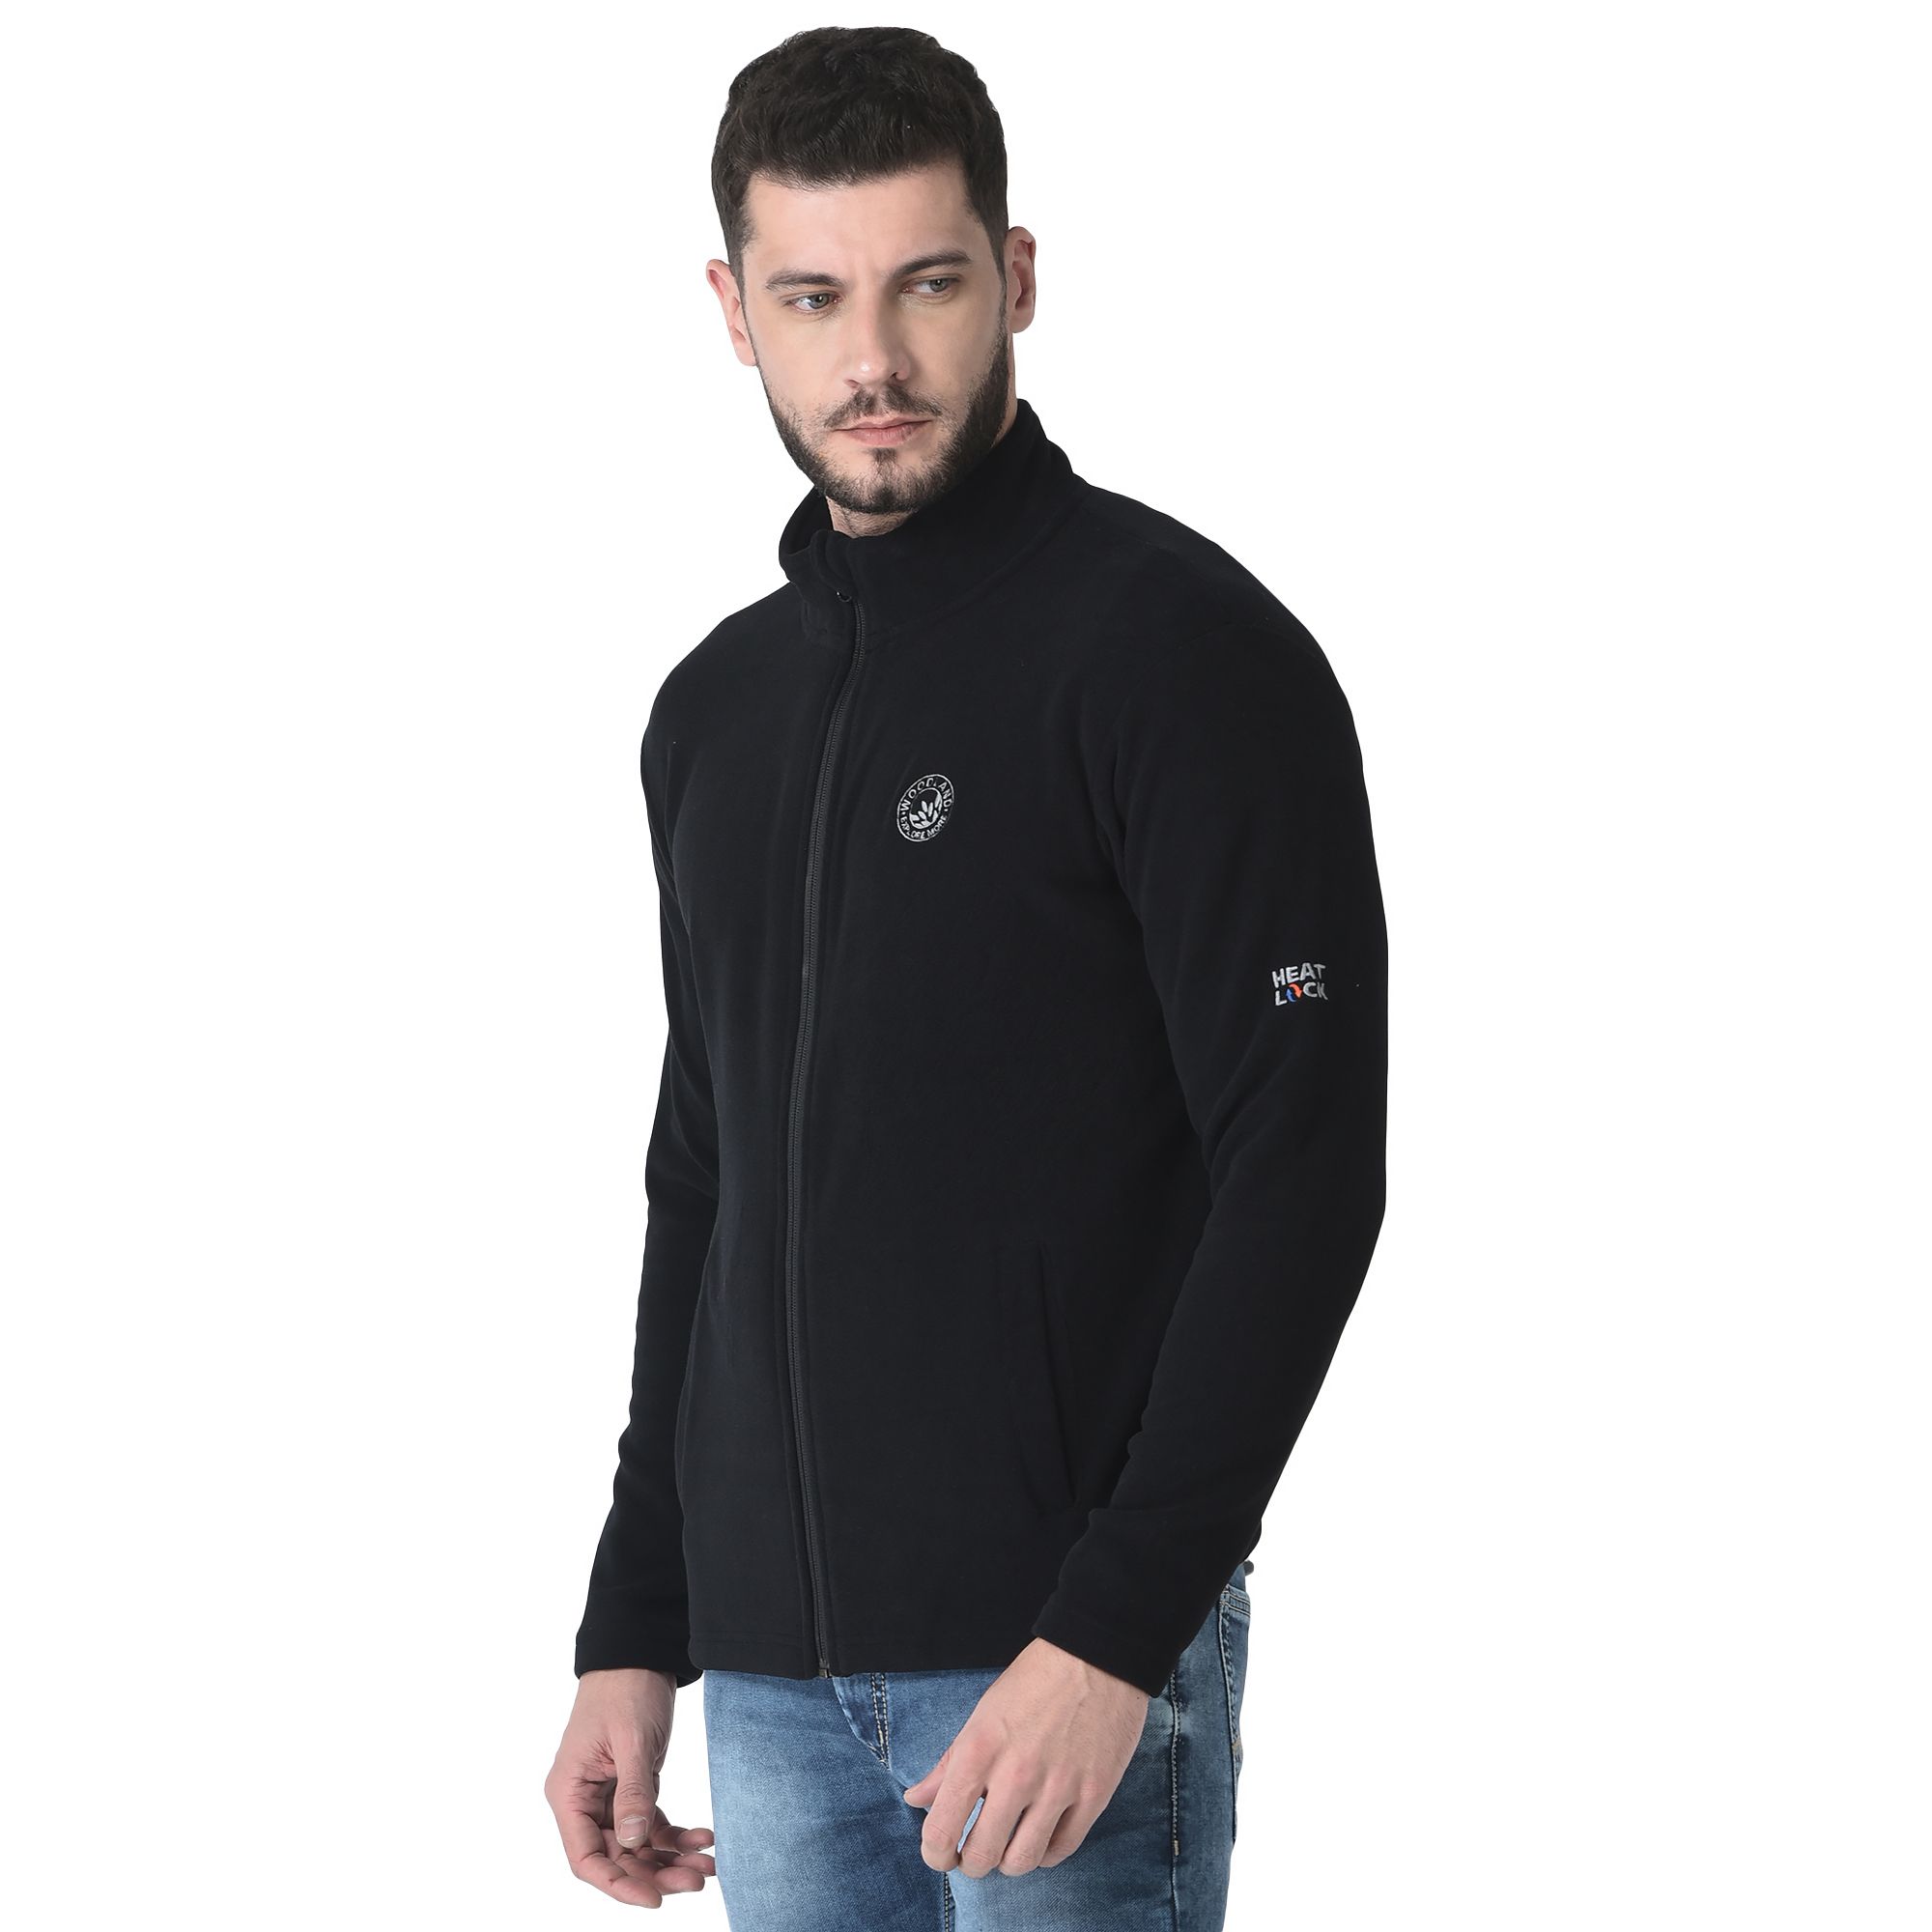 Black Fleece Jacket for Men